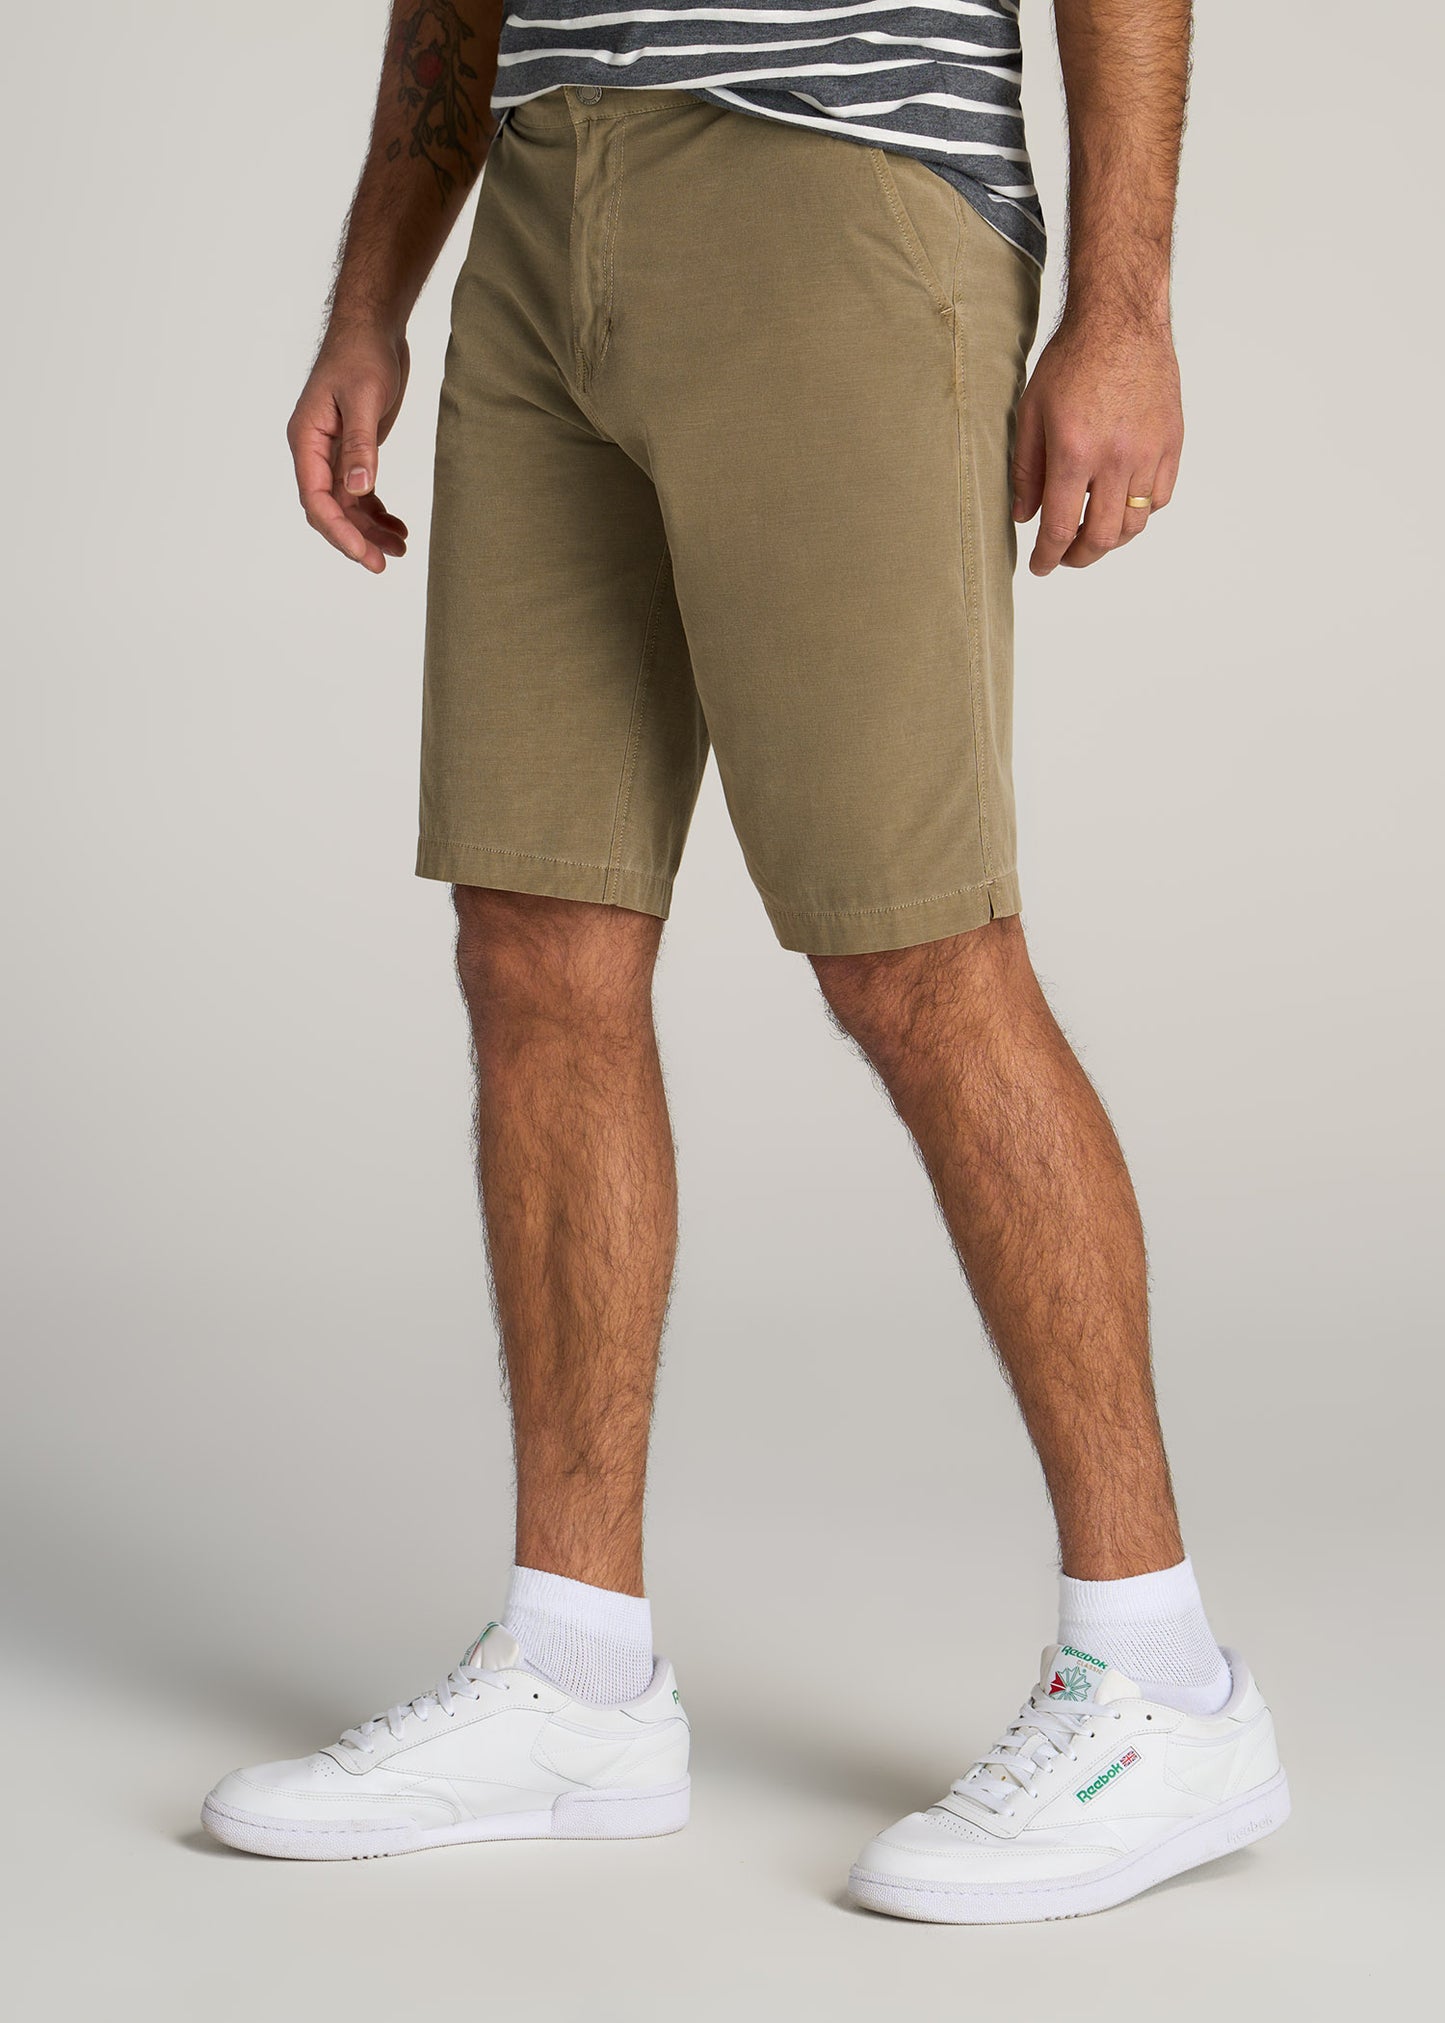 American-Tall-Men-LJ-Deck-Shorts-Vintage-Buck-side